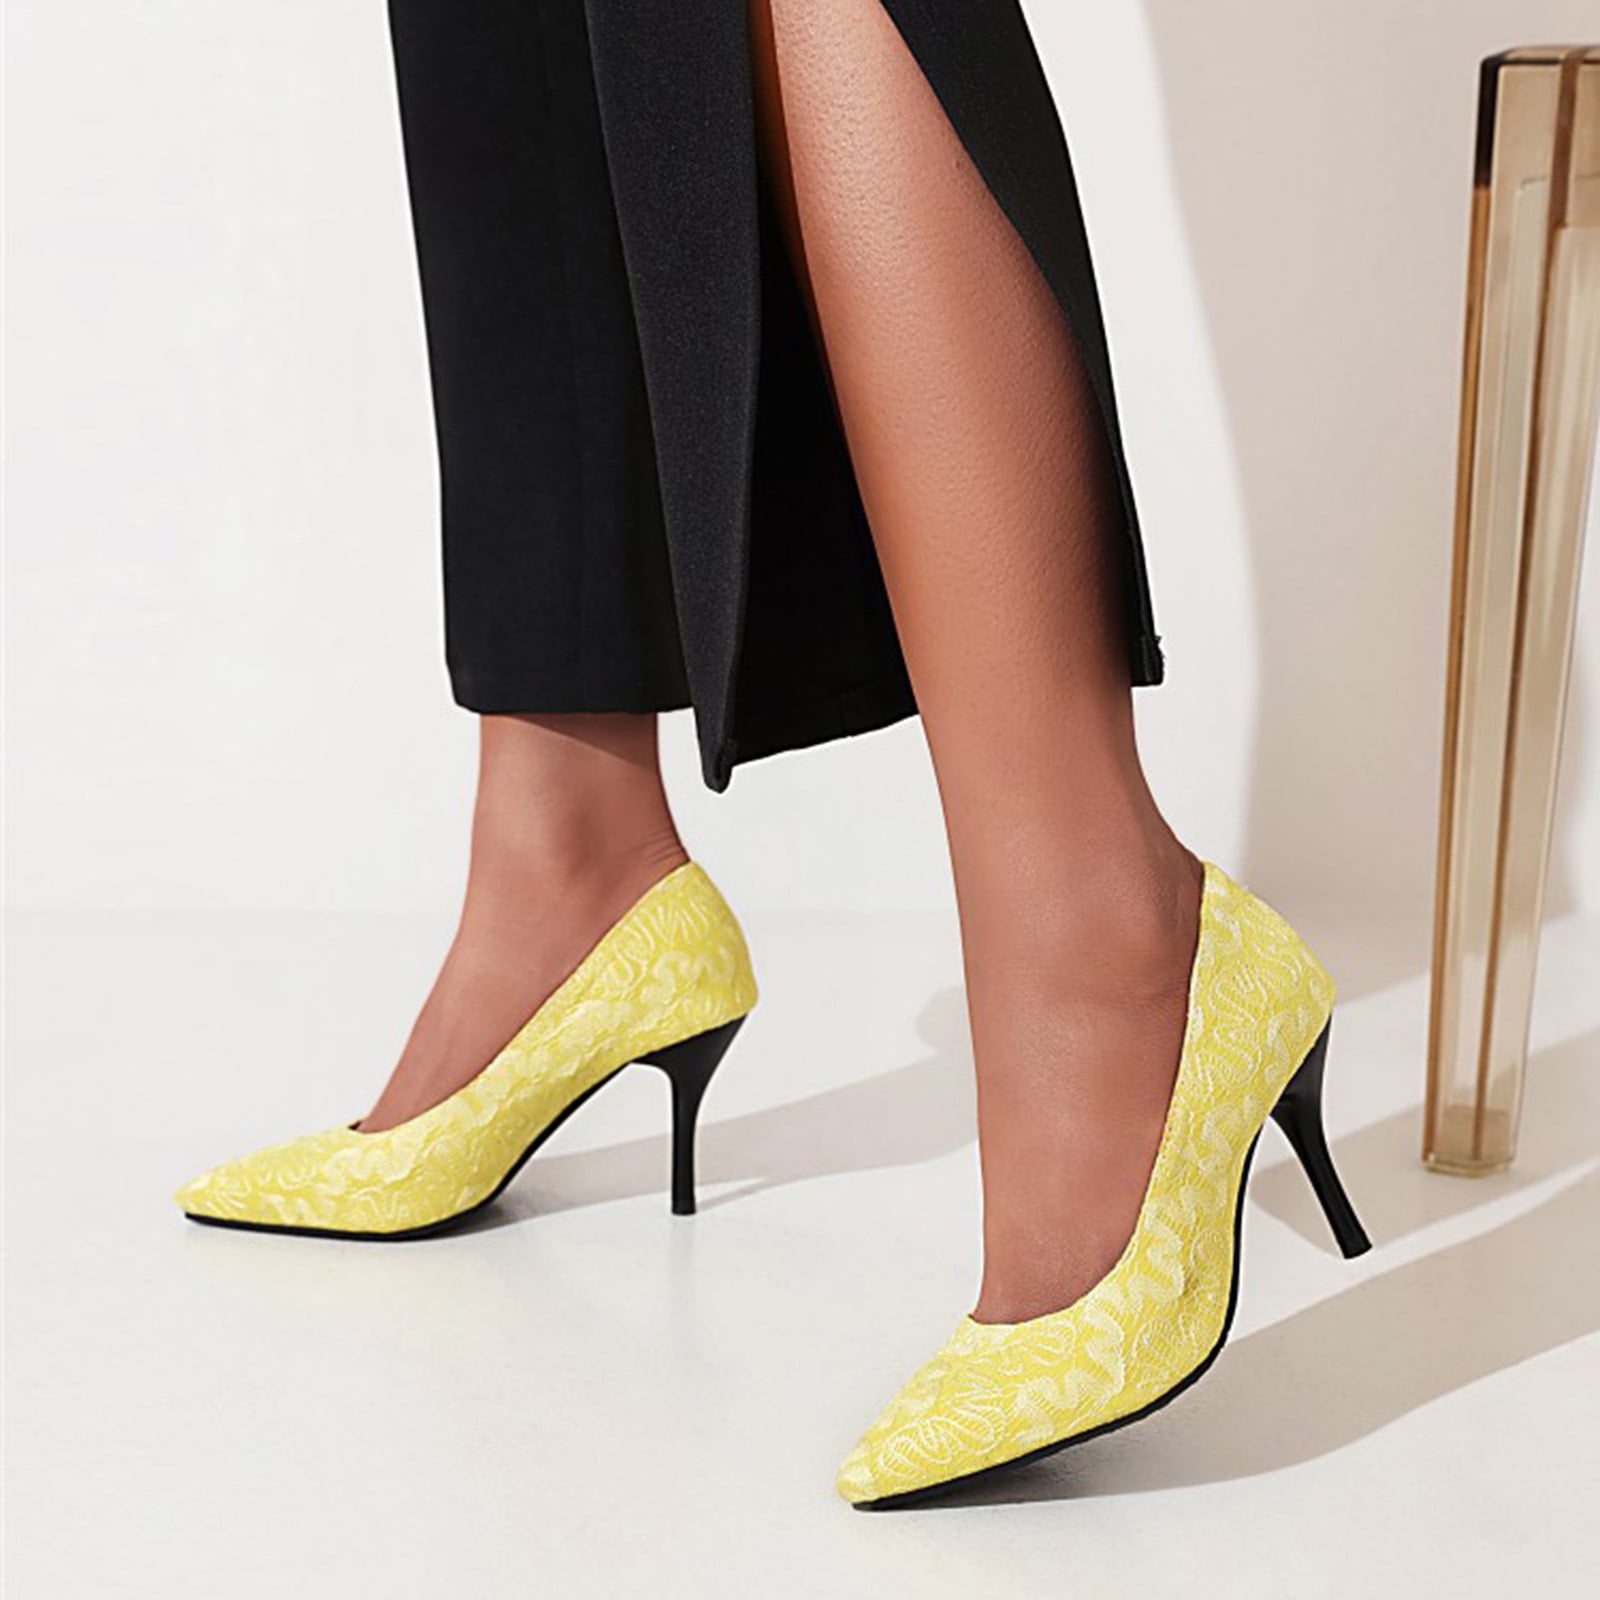 Women's Stilettos Pointed Toe Pumps High Heels Wedding Party Fashion Shoes  New | eBay